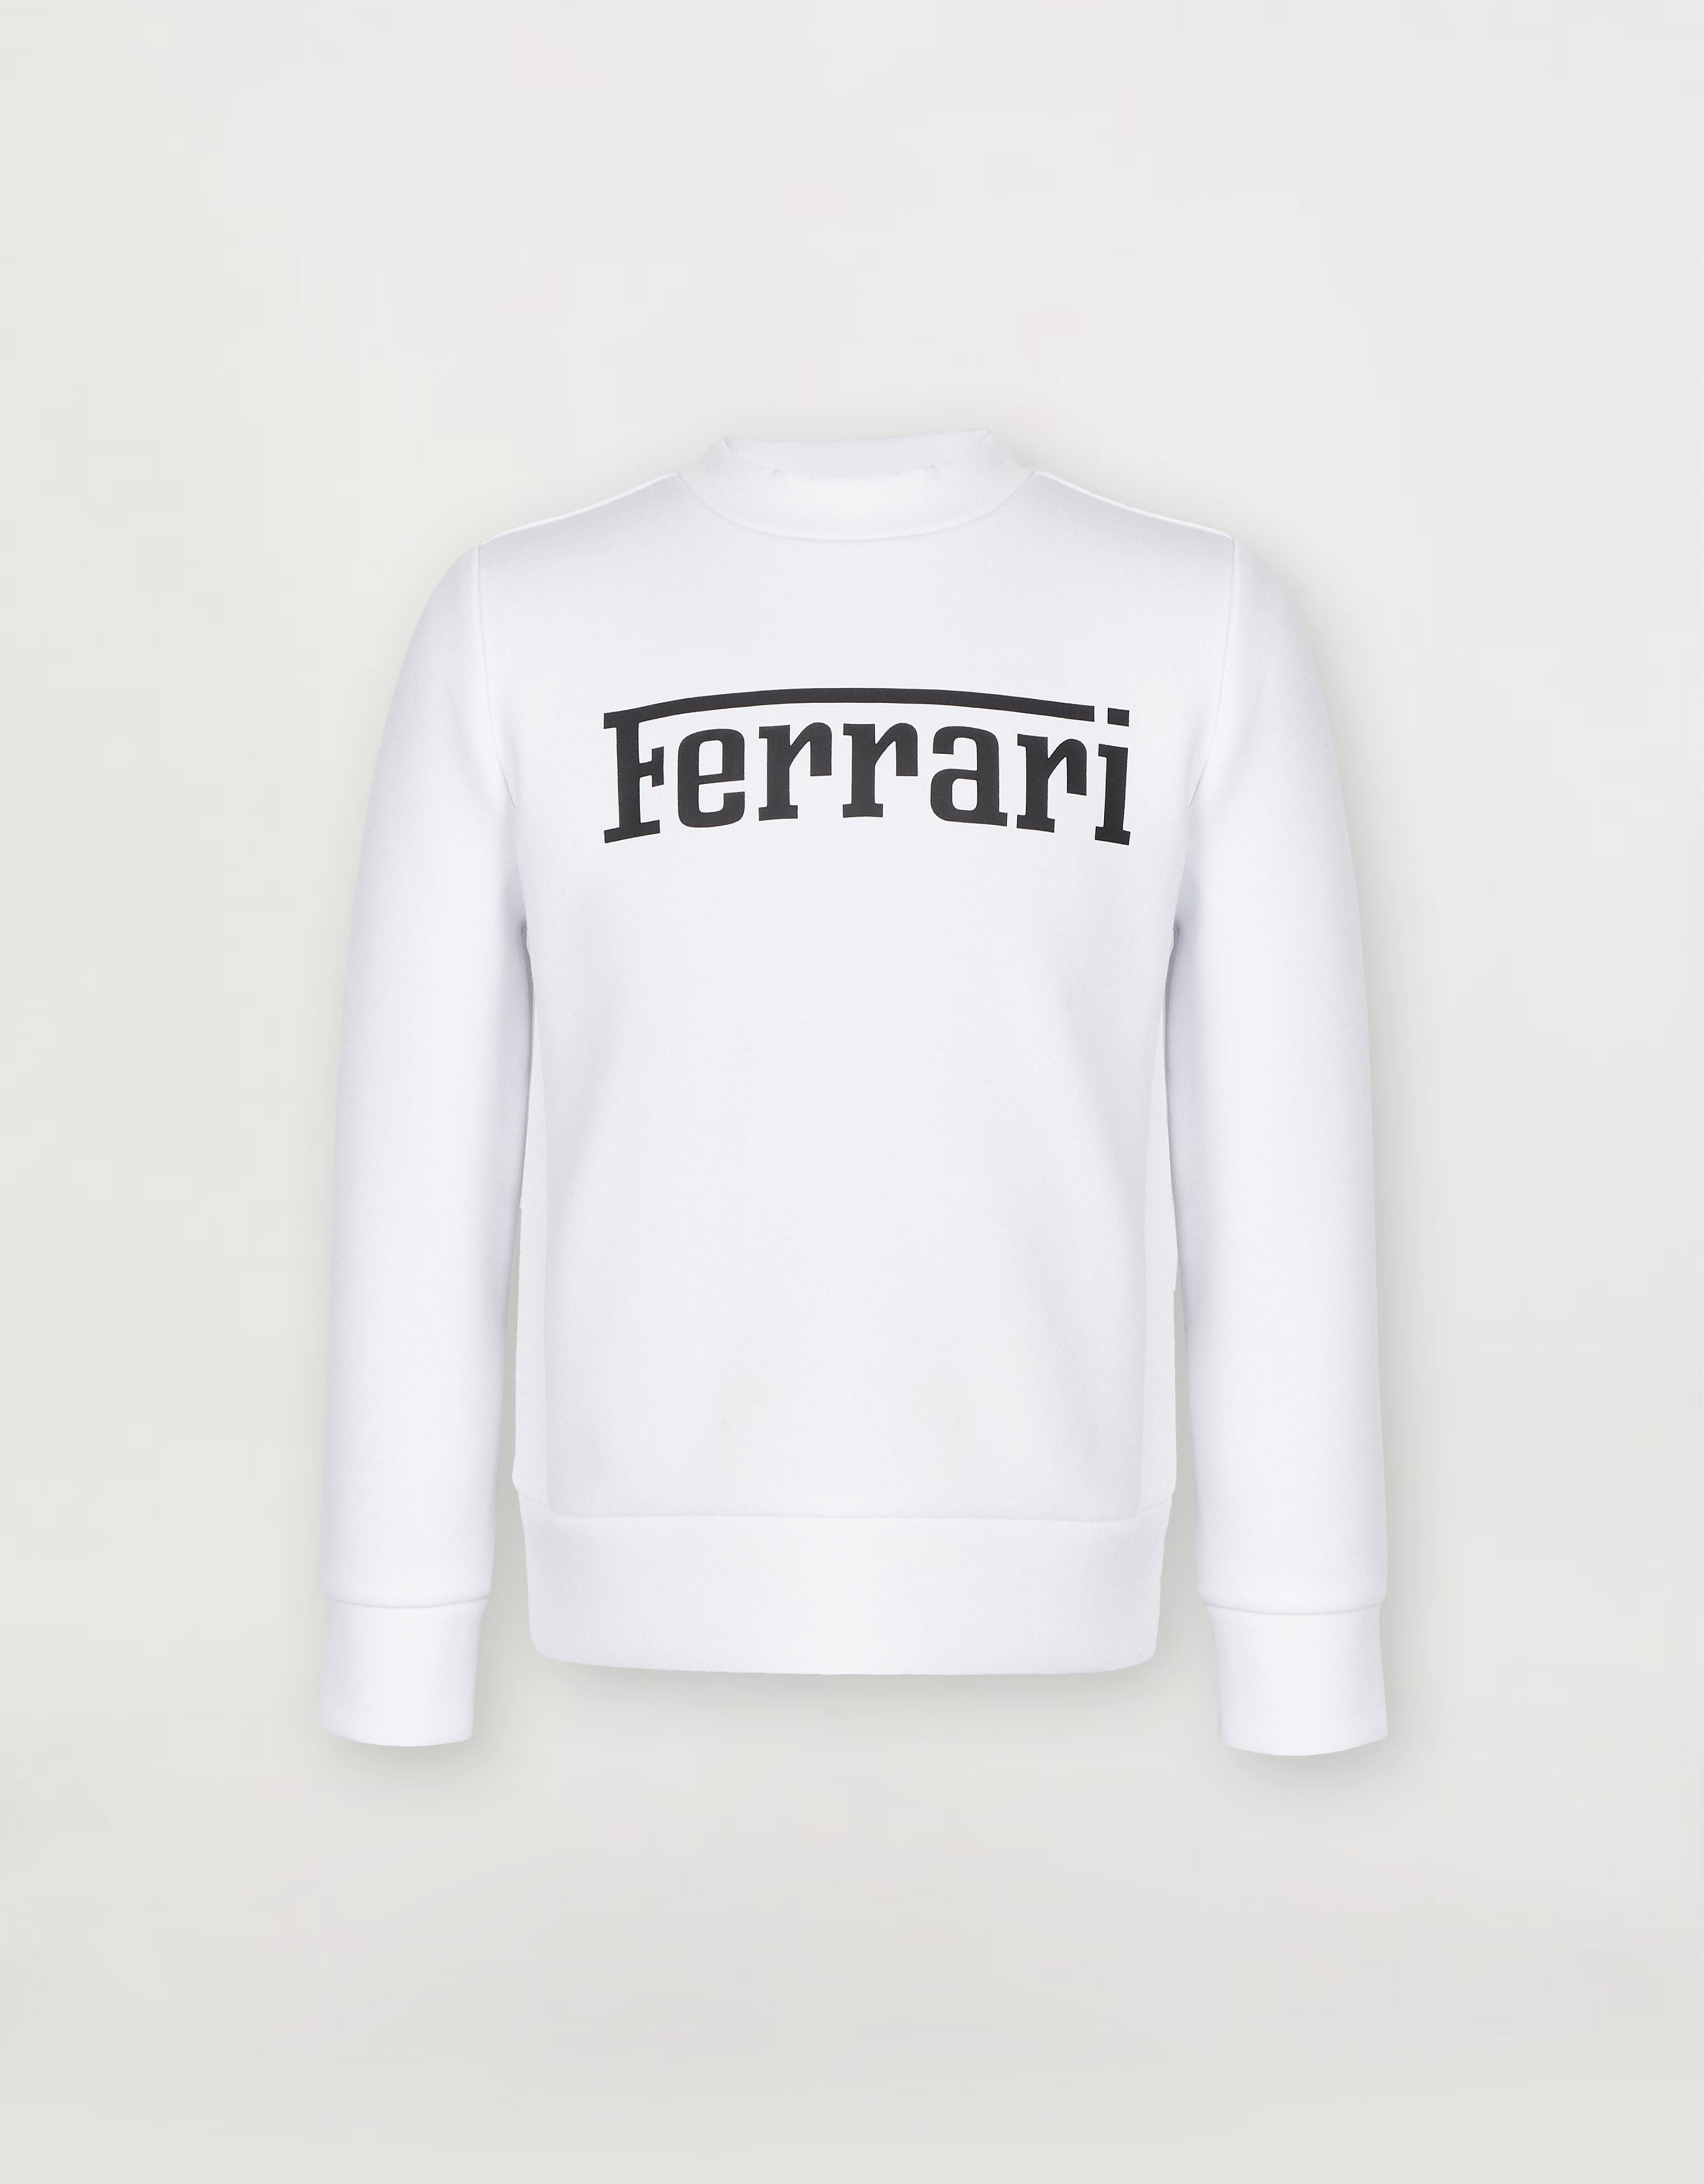 Ferrari Children’s sweatshirt in recycled scuba fabric with large Ferrari logo Rosso Corsa 20160fK